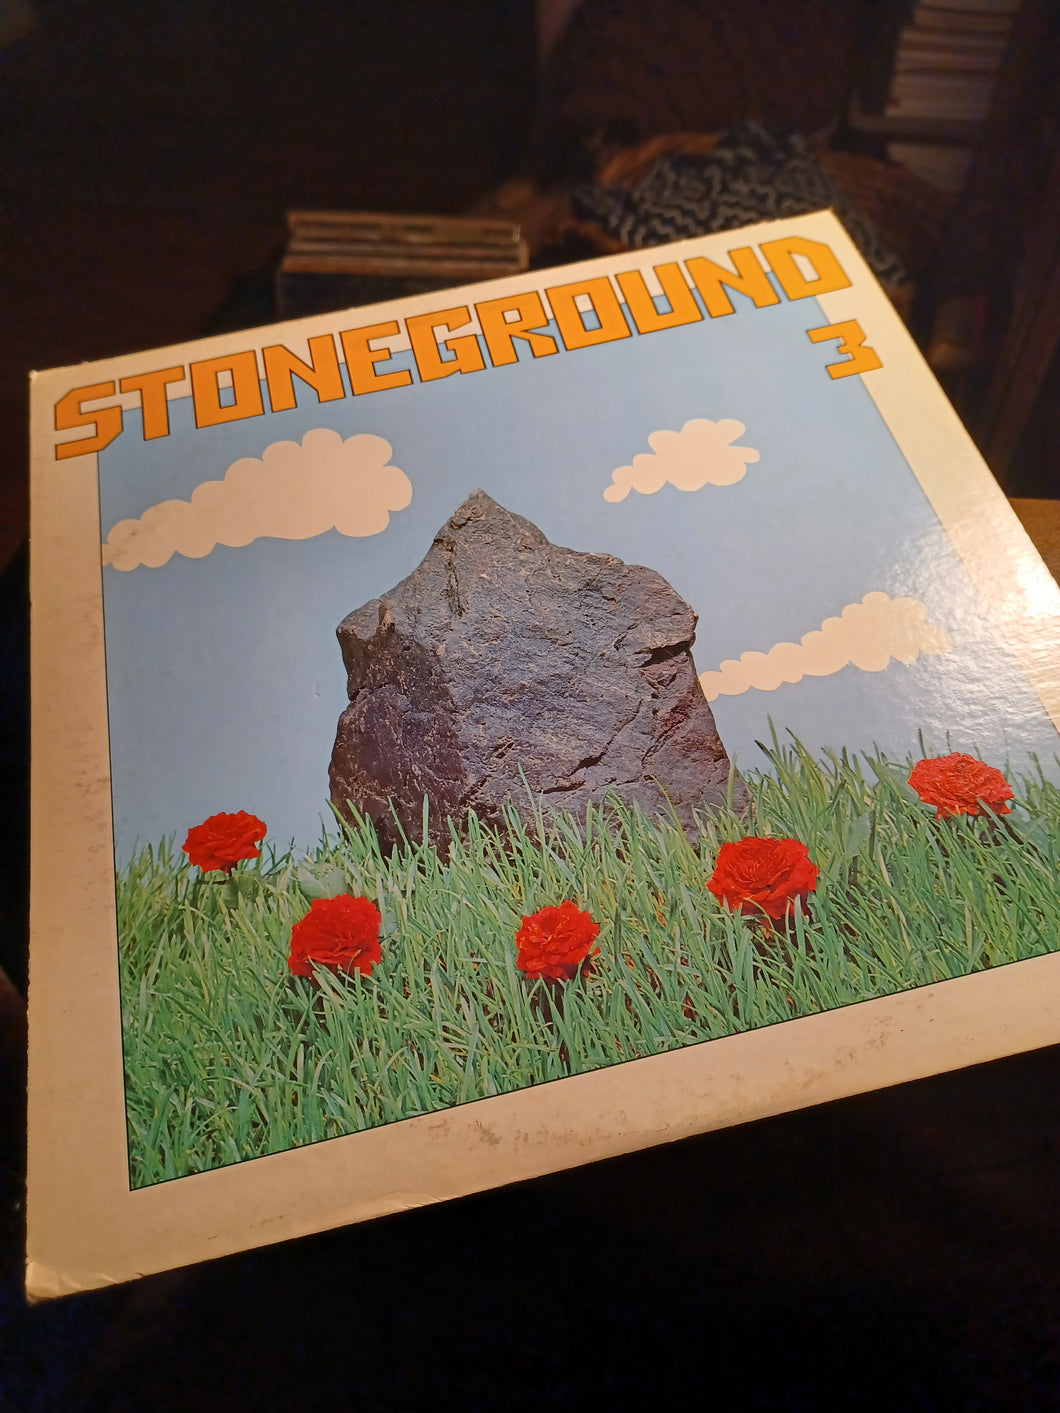 Stoneground  Stoneground 3 vinyl record album